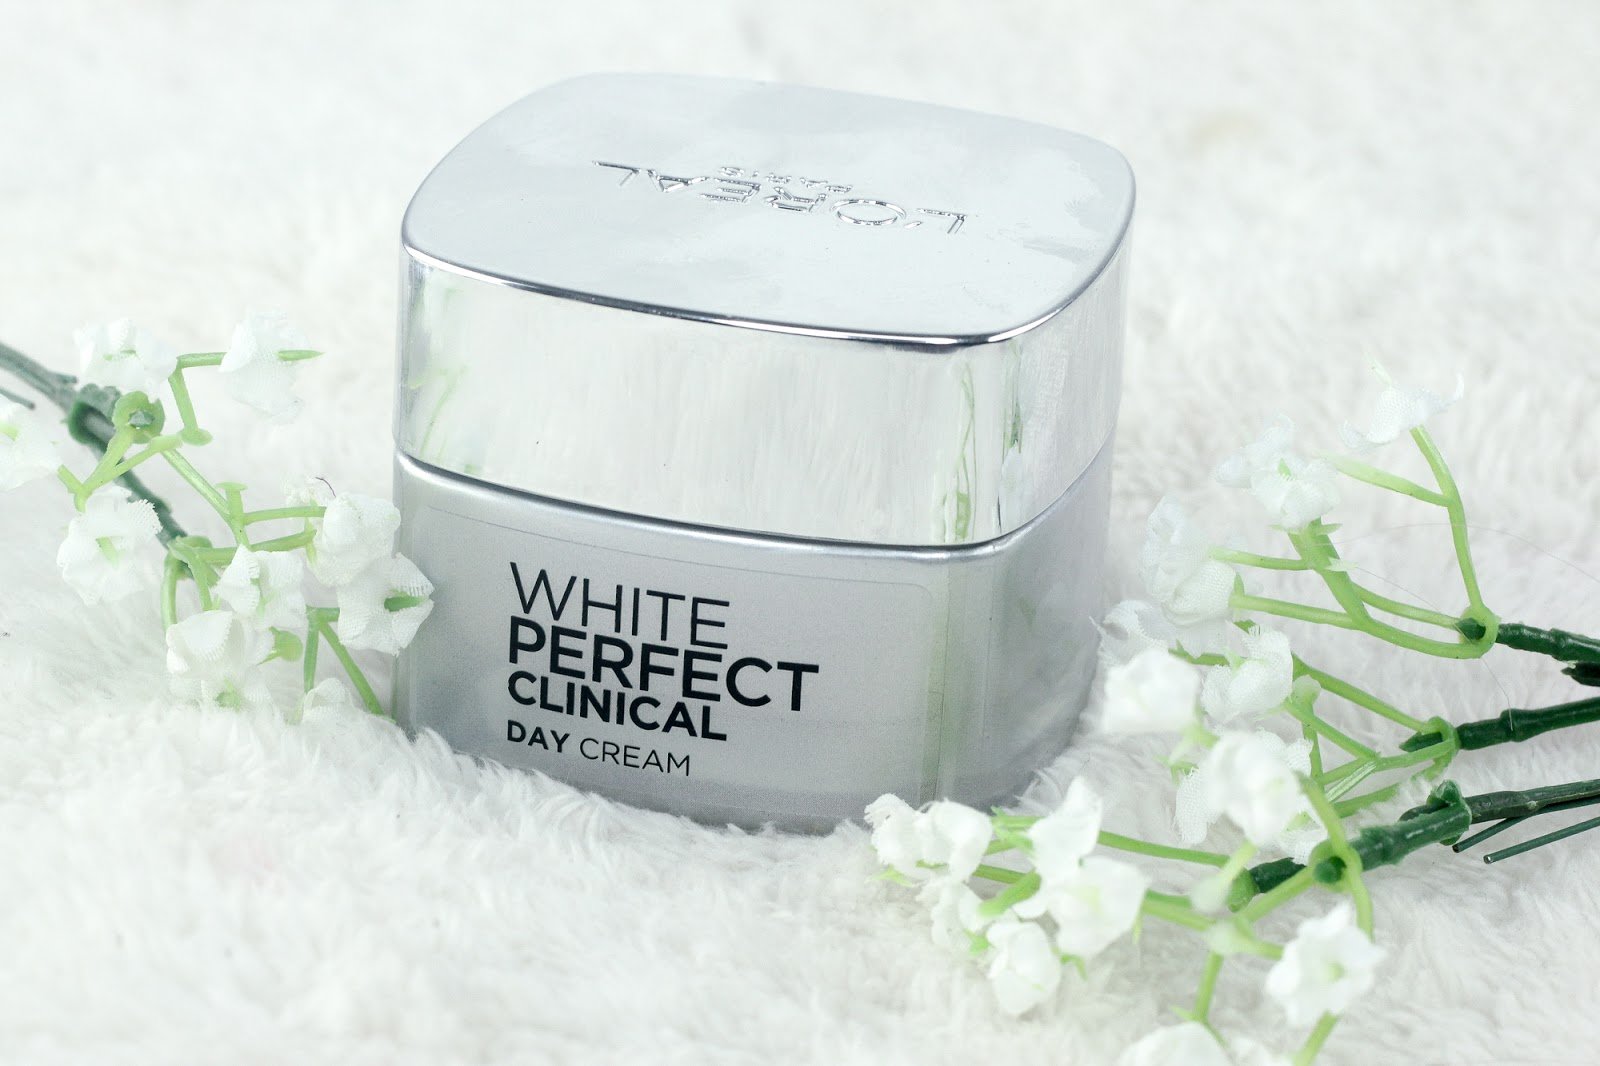 L'OREAL White Perfect Clinical Day Cream